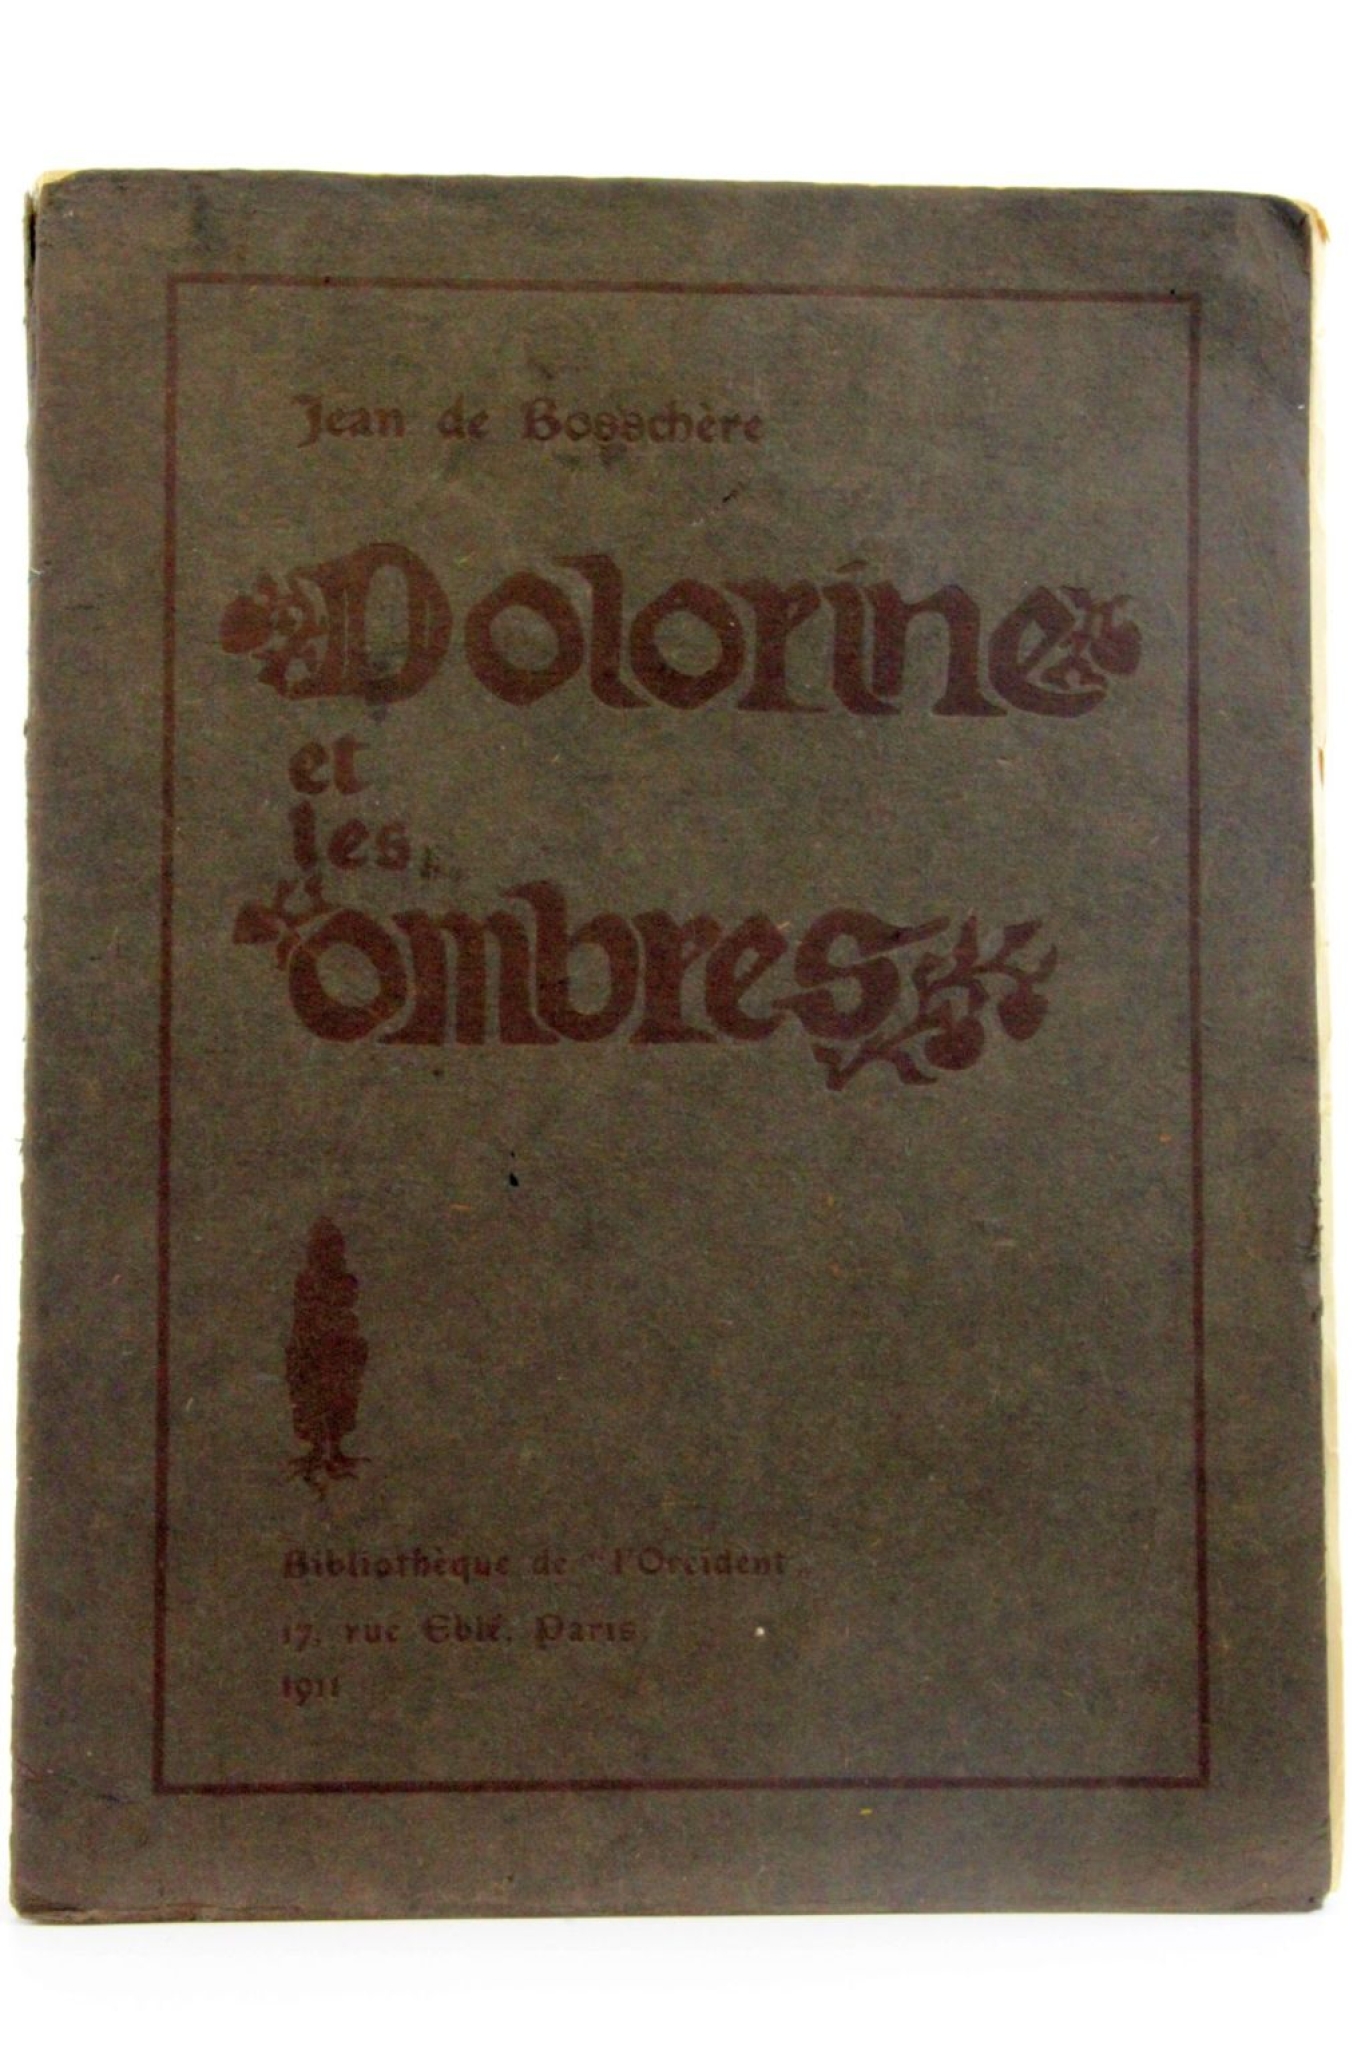 Bosschere, Jean de: Dolorine et les Ombres Wunderschön und farbenprächtig illustriert.